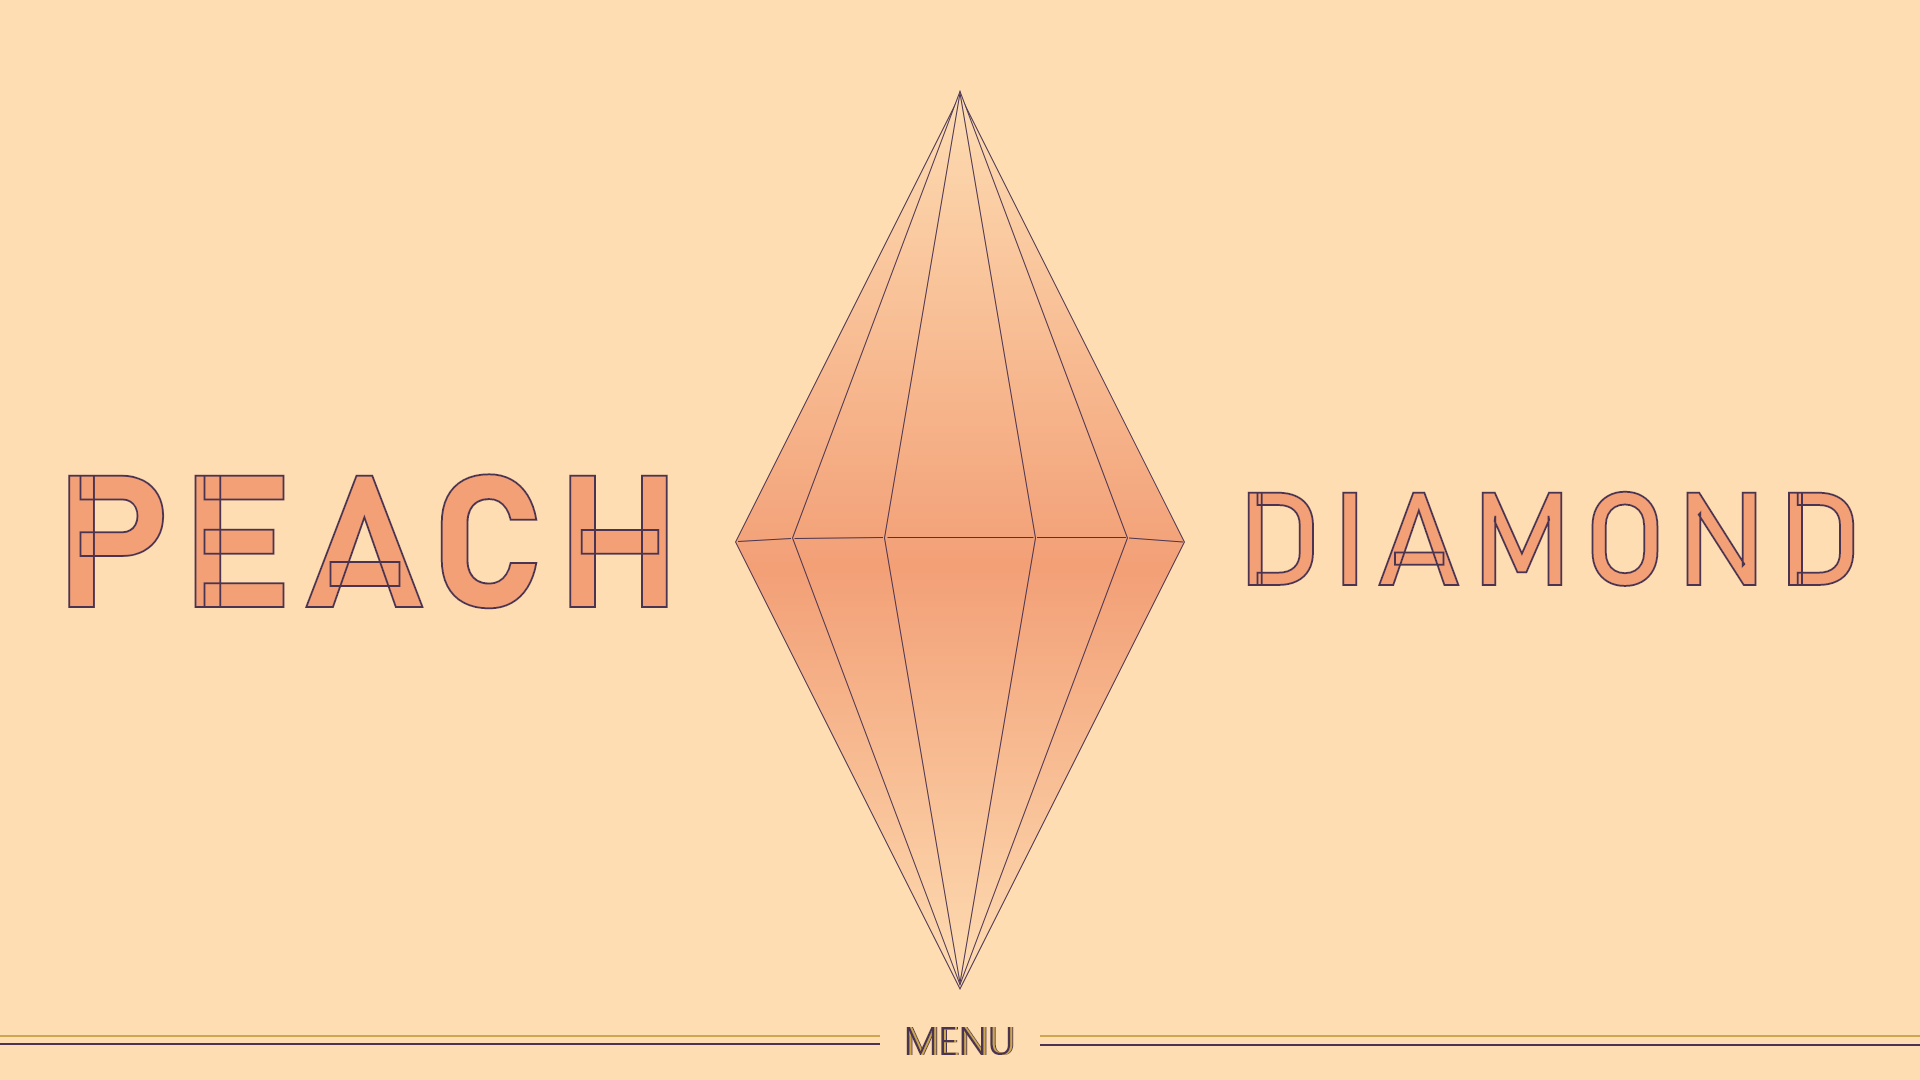 peach diamond web page concept